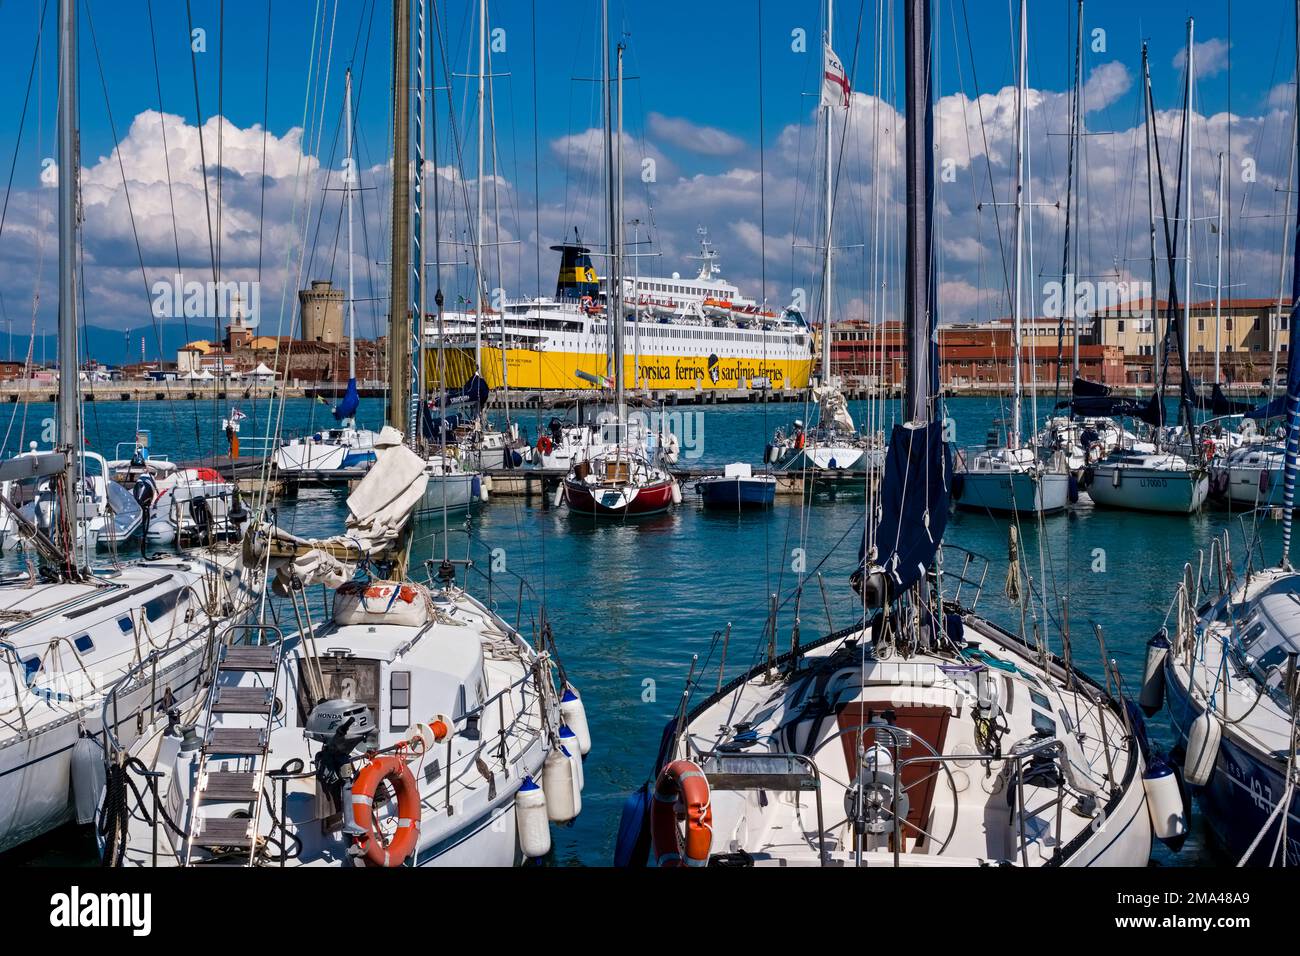 The Corsica Victoria, a Corsica Ferries ferry, is anchored in the Darsena part of the Port of Livorno, Porto di Livorno, surrounded by sailboats. Stock Photo